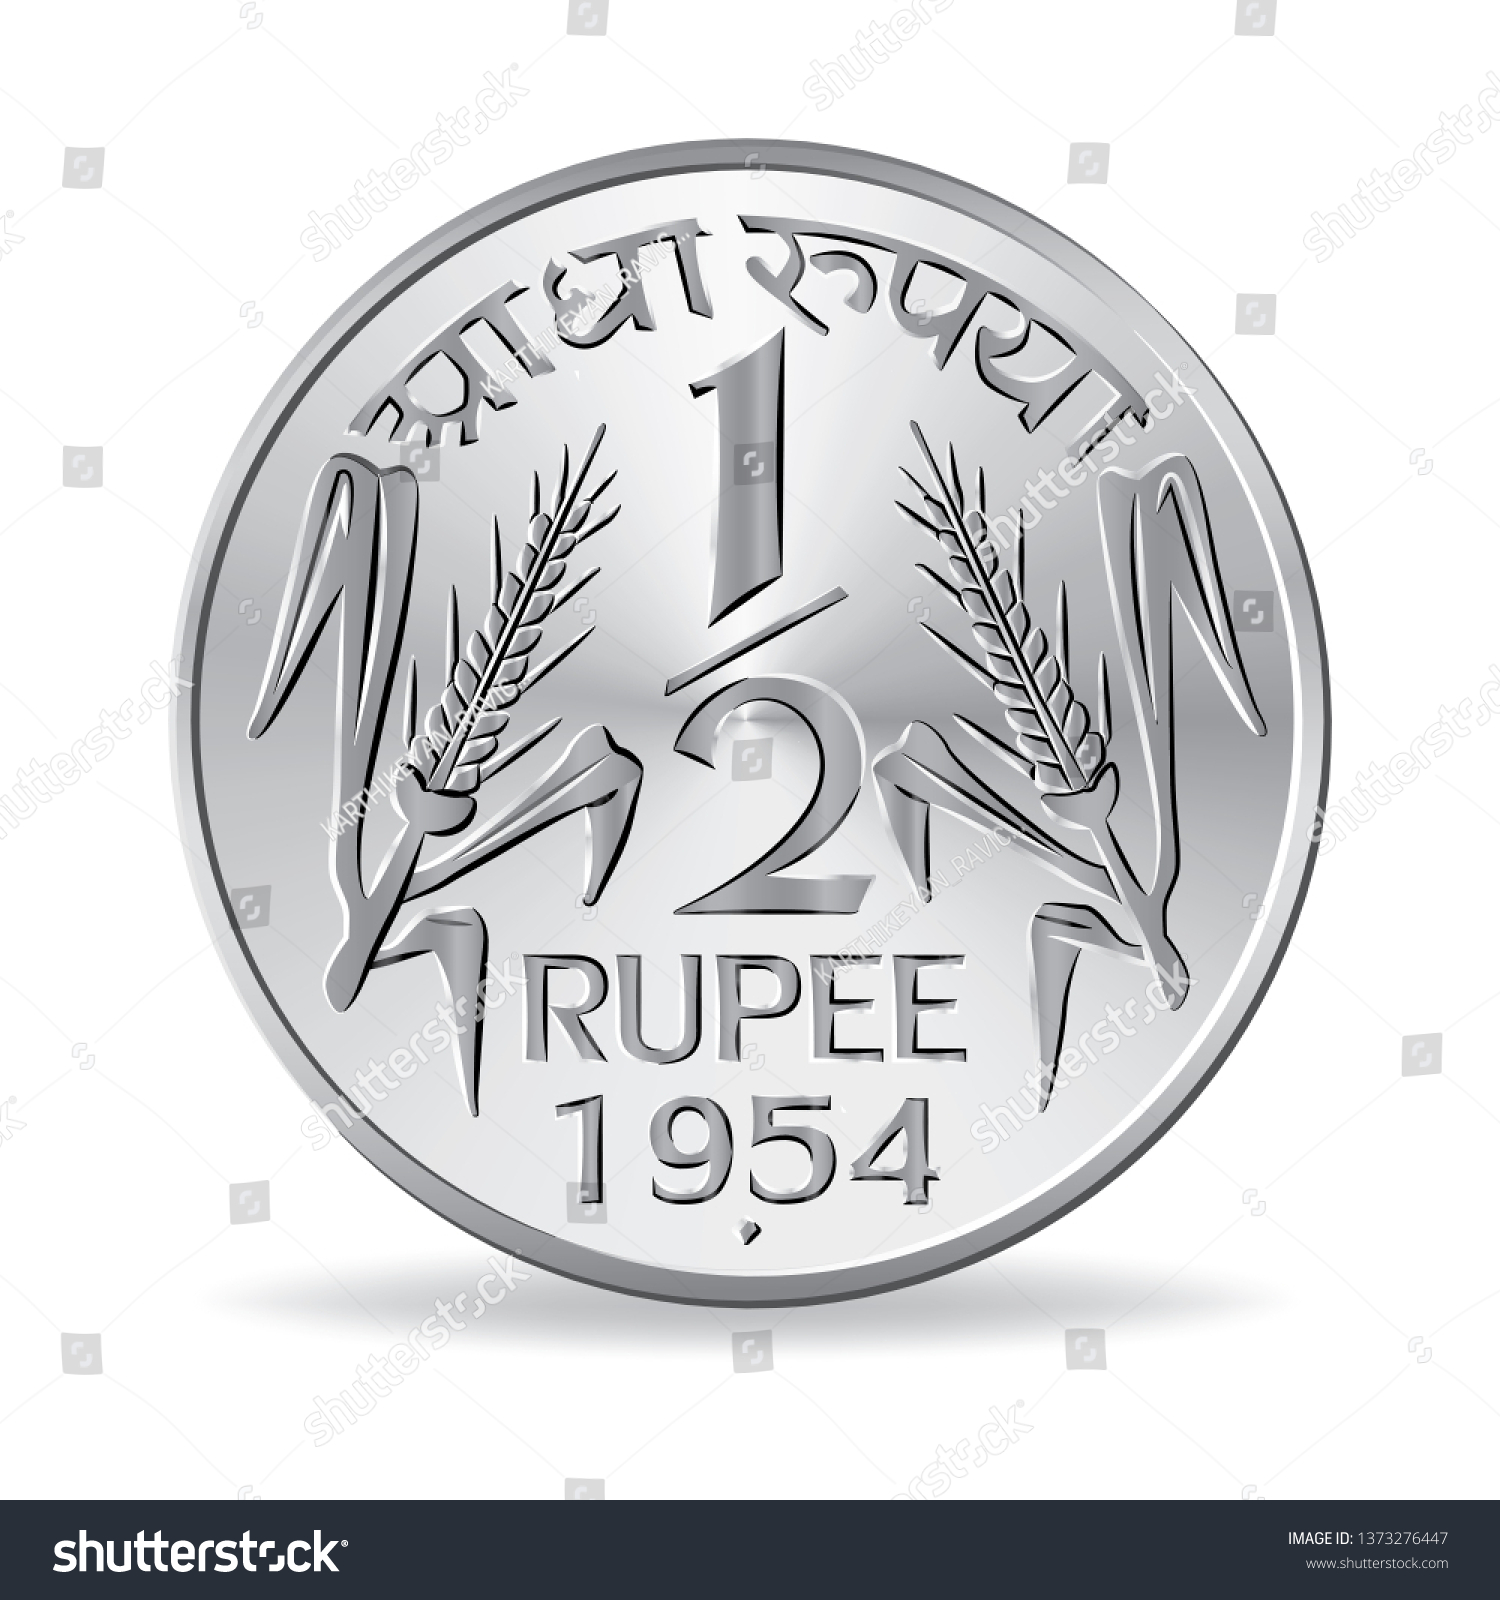 SVG of Indian half rupee coin 1954 in vector illustration. Translation: 